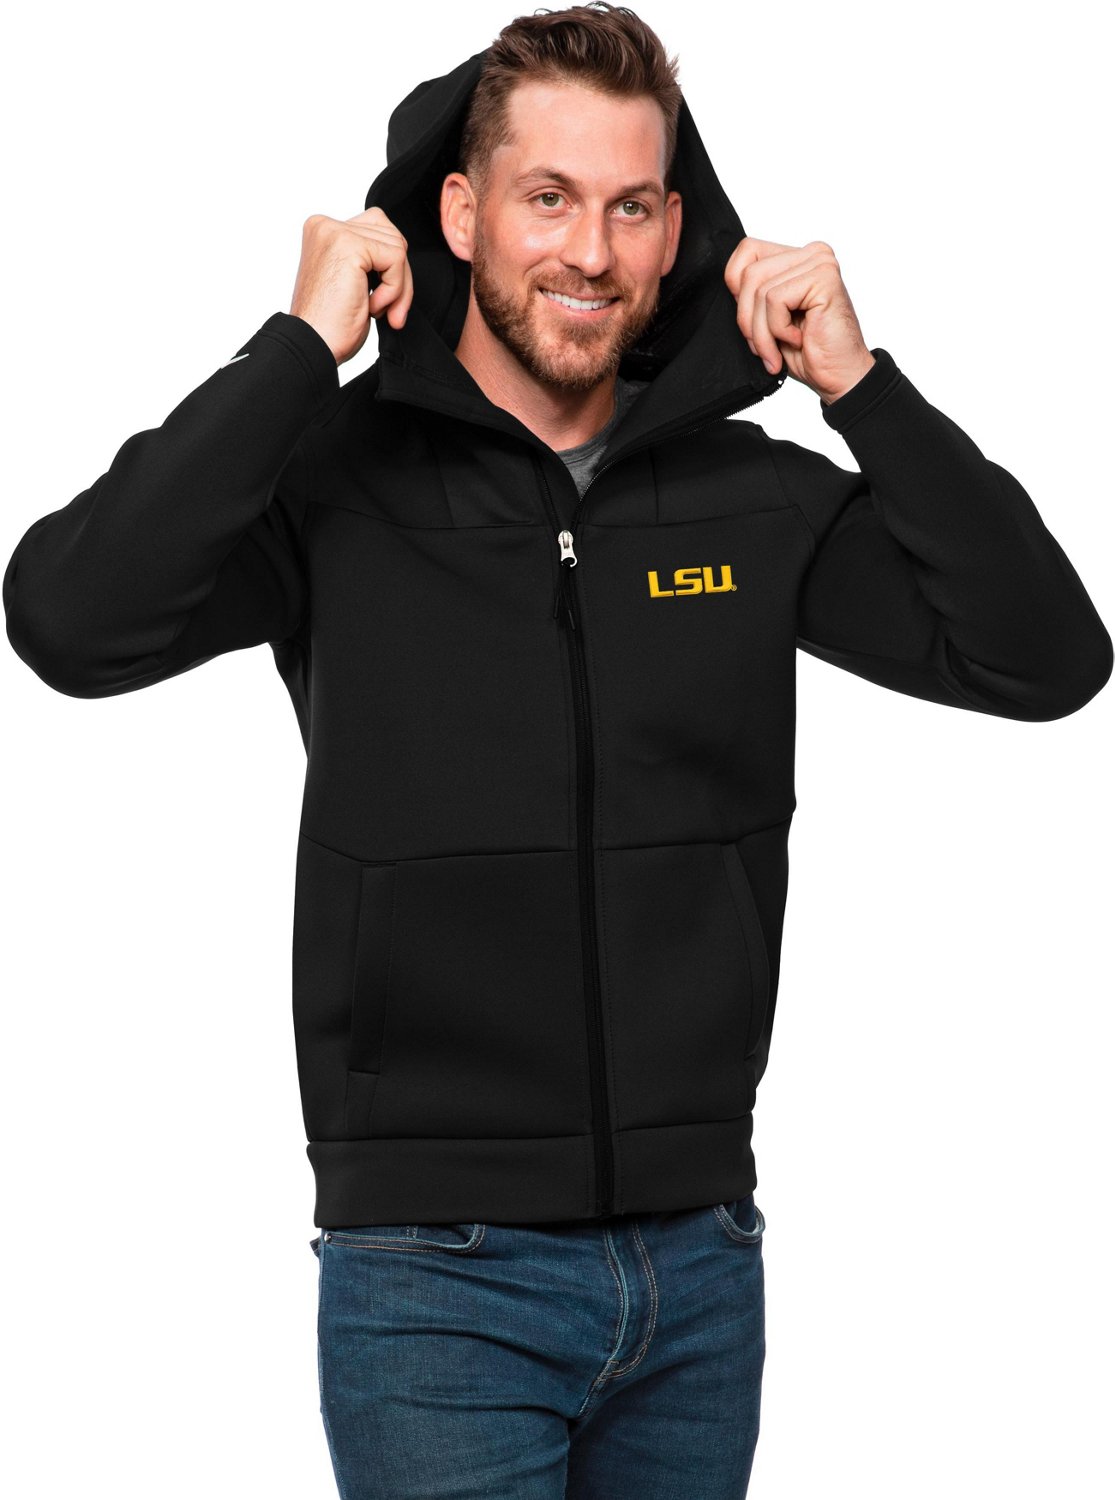 Louisiana State University Full-Zip Jacket, Pullover Jacket, LSU